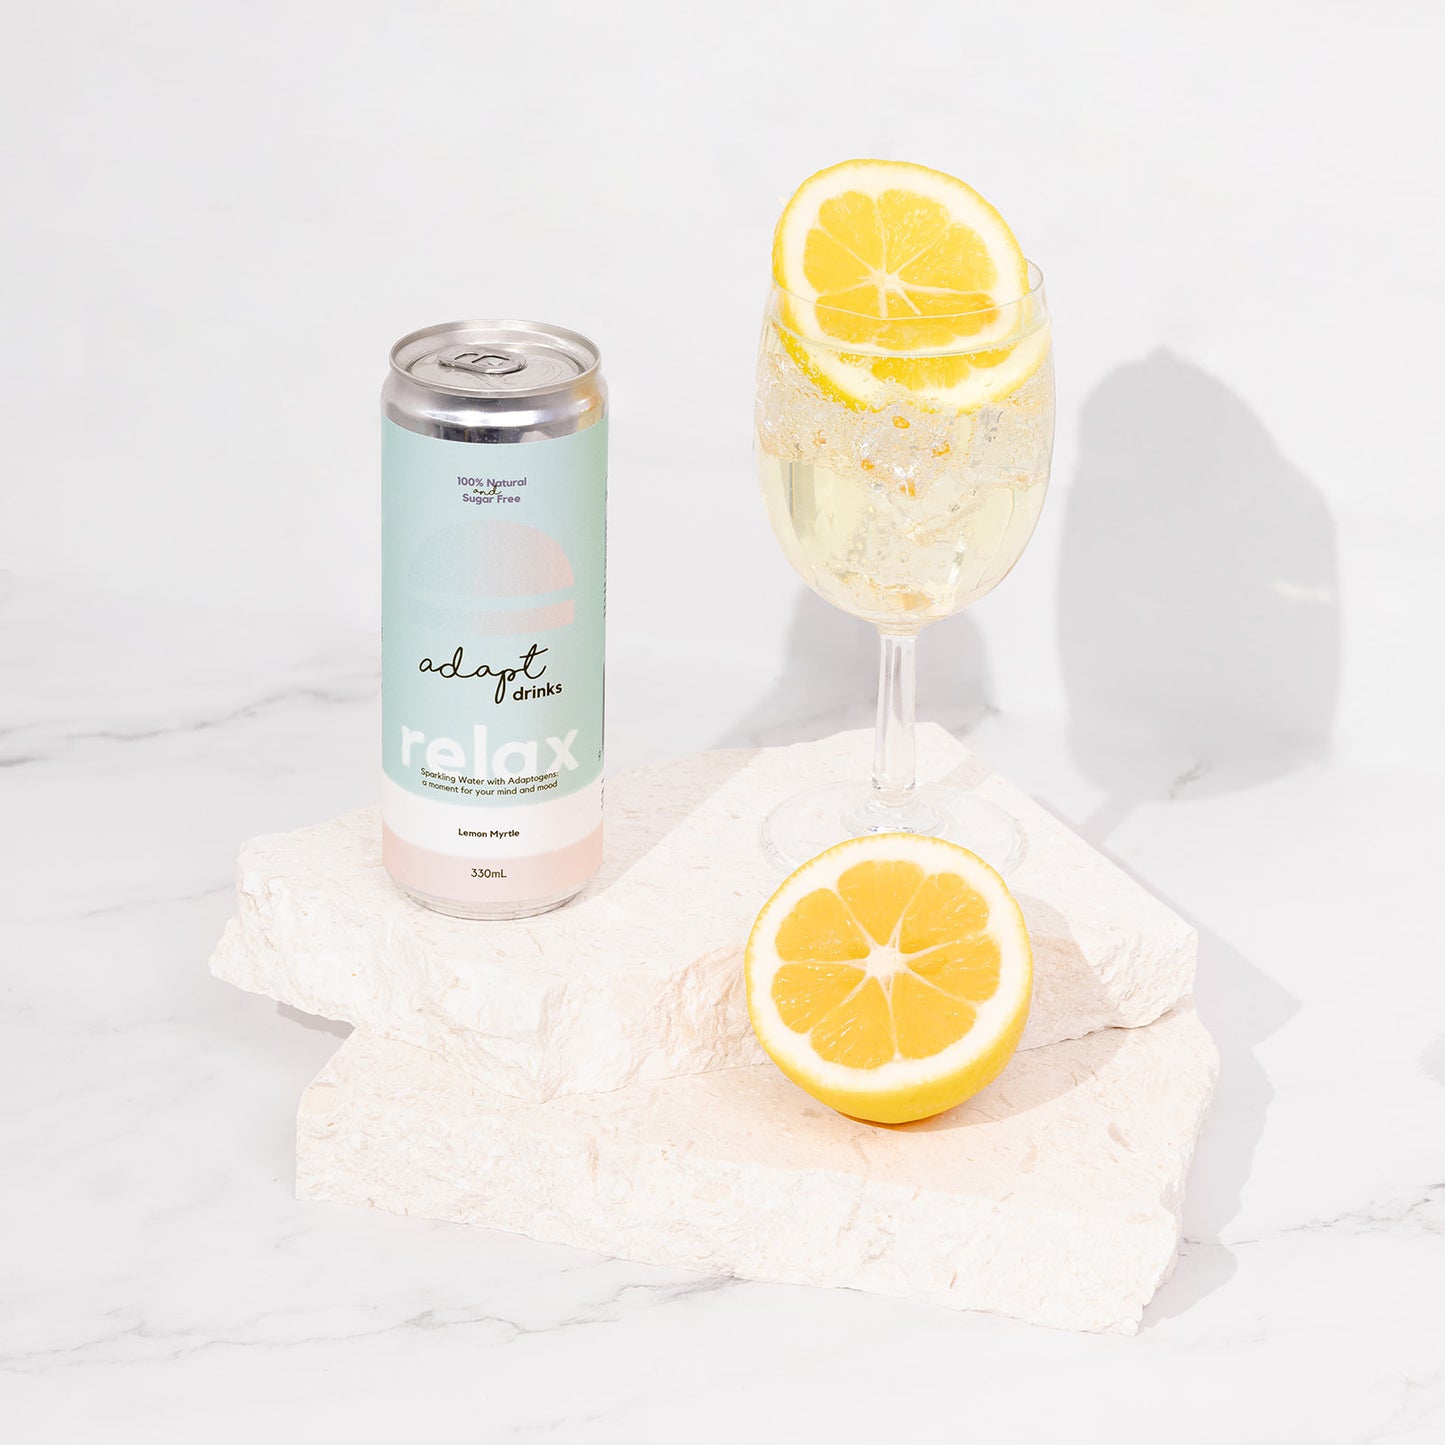 sparkling adaptogenic drinks - lemon myrtle poured into glass with slice of lemon